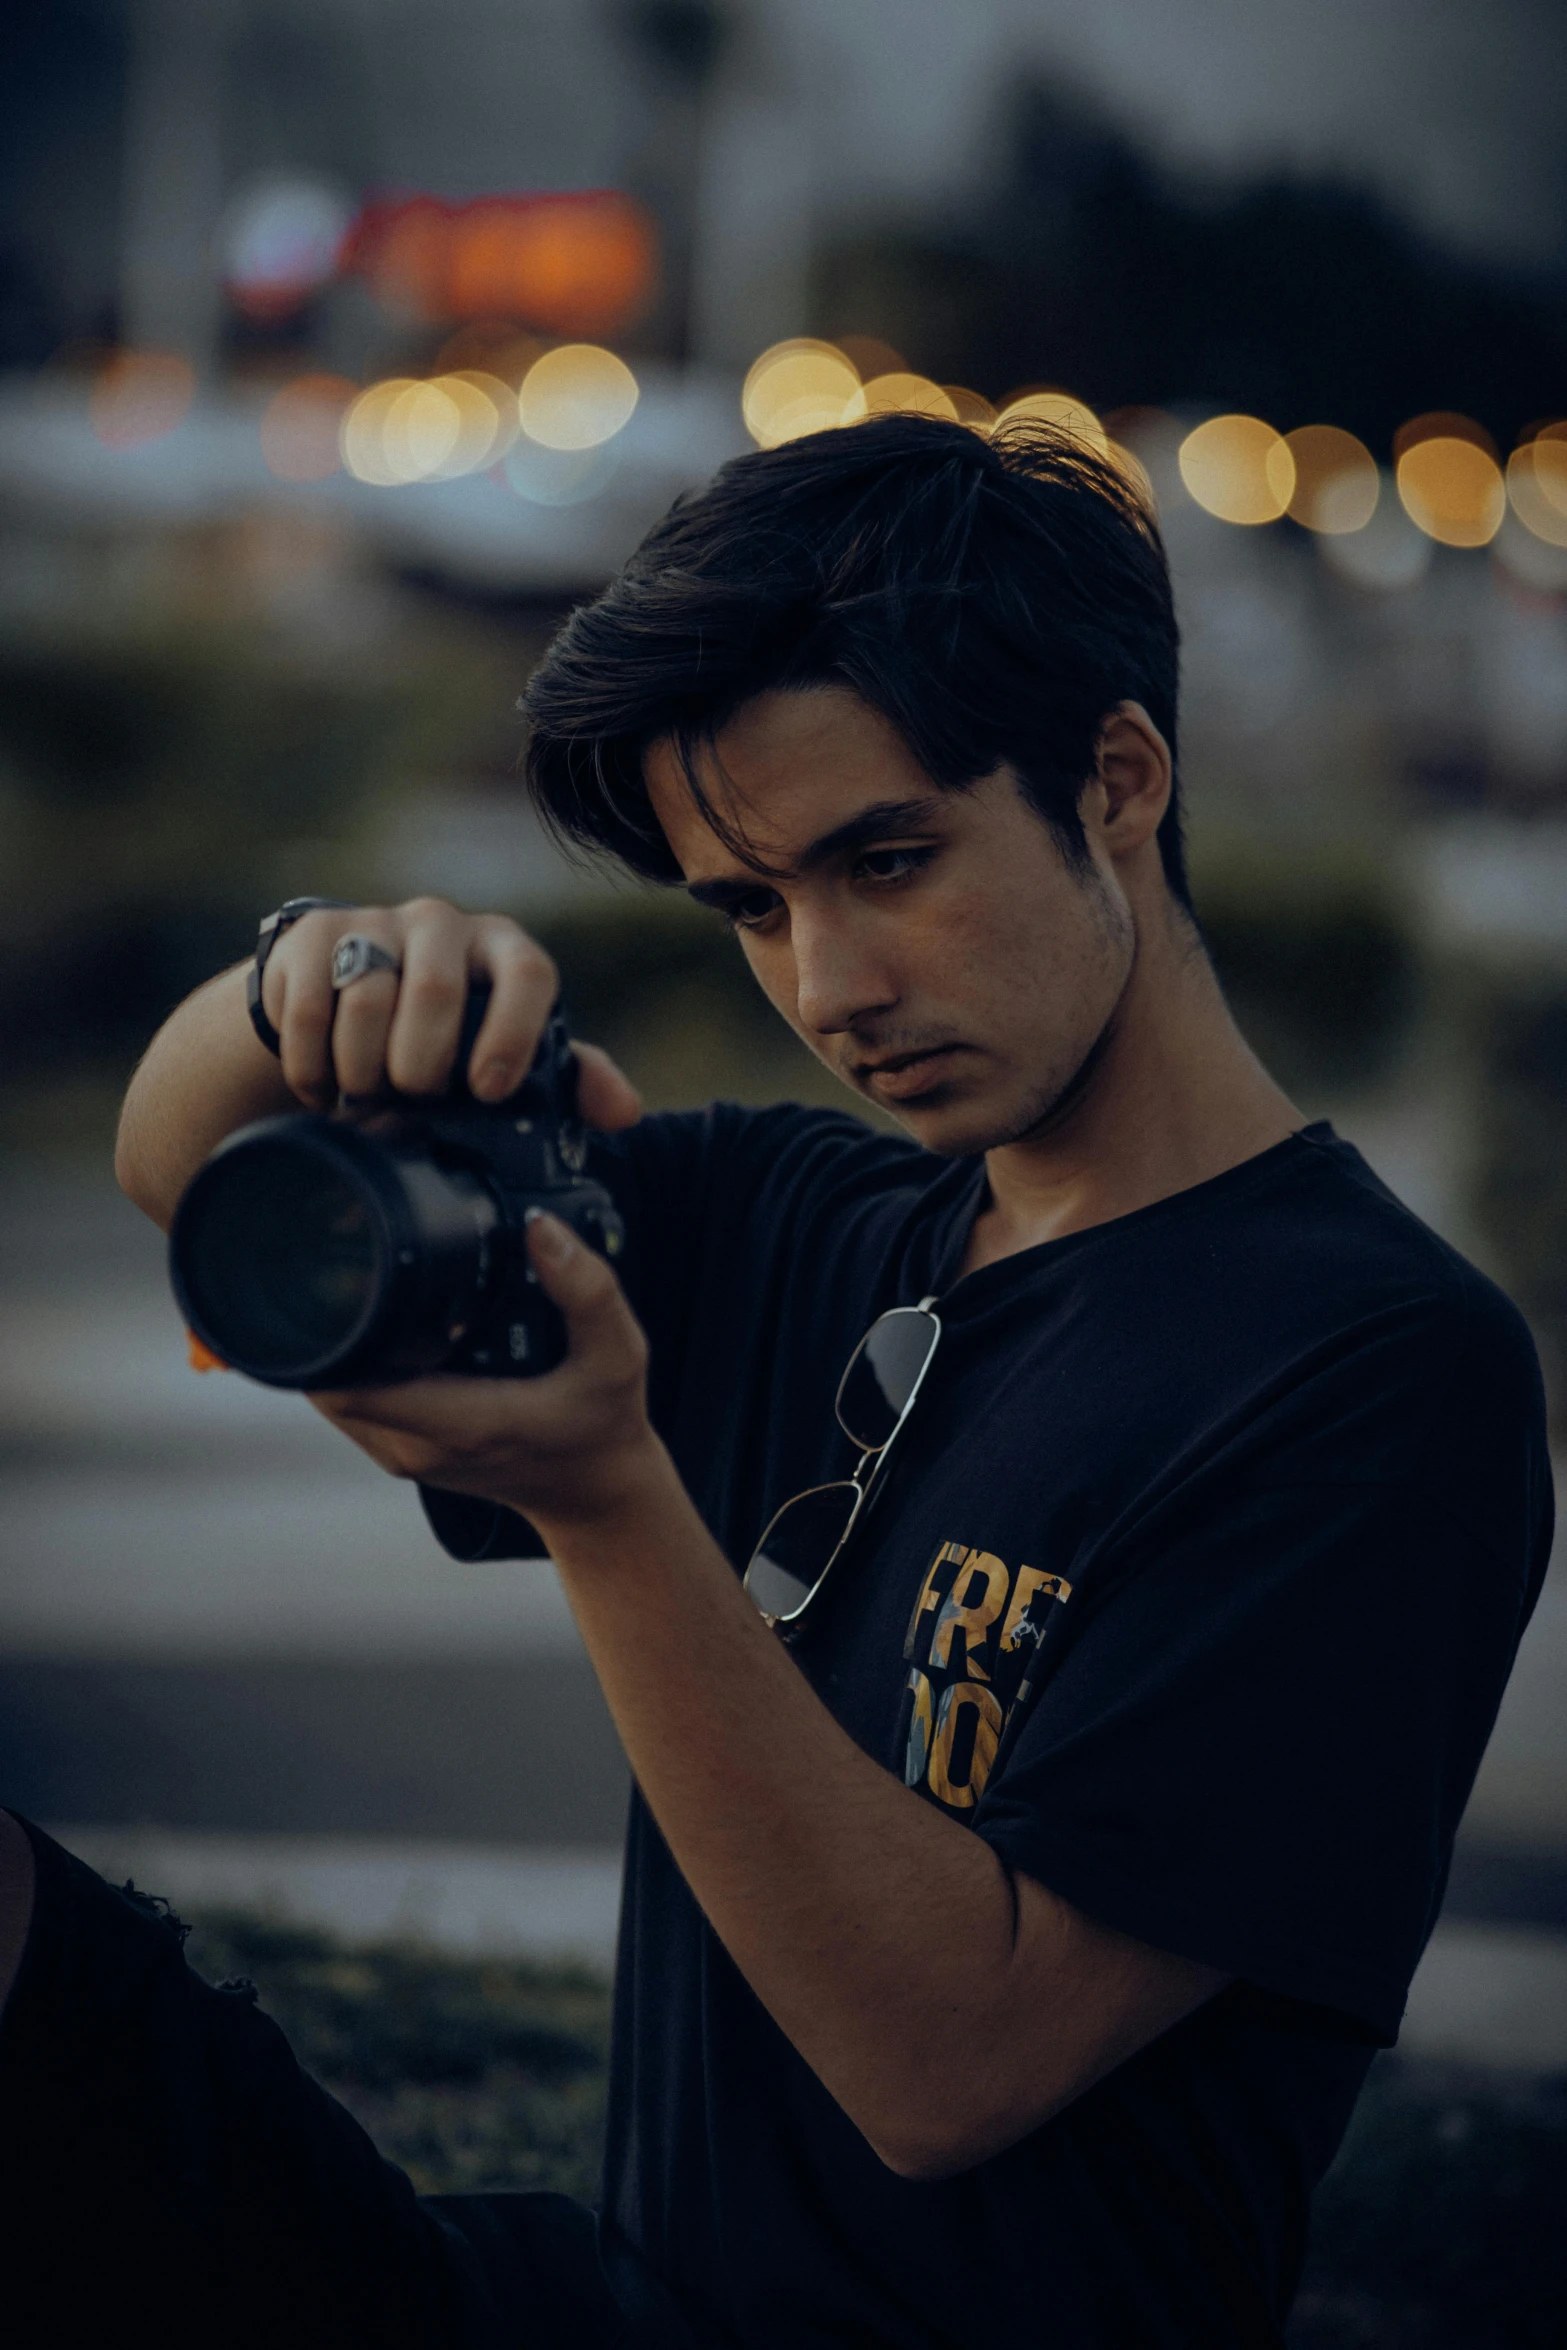 a man holding a camera in a dark street